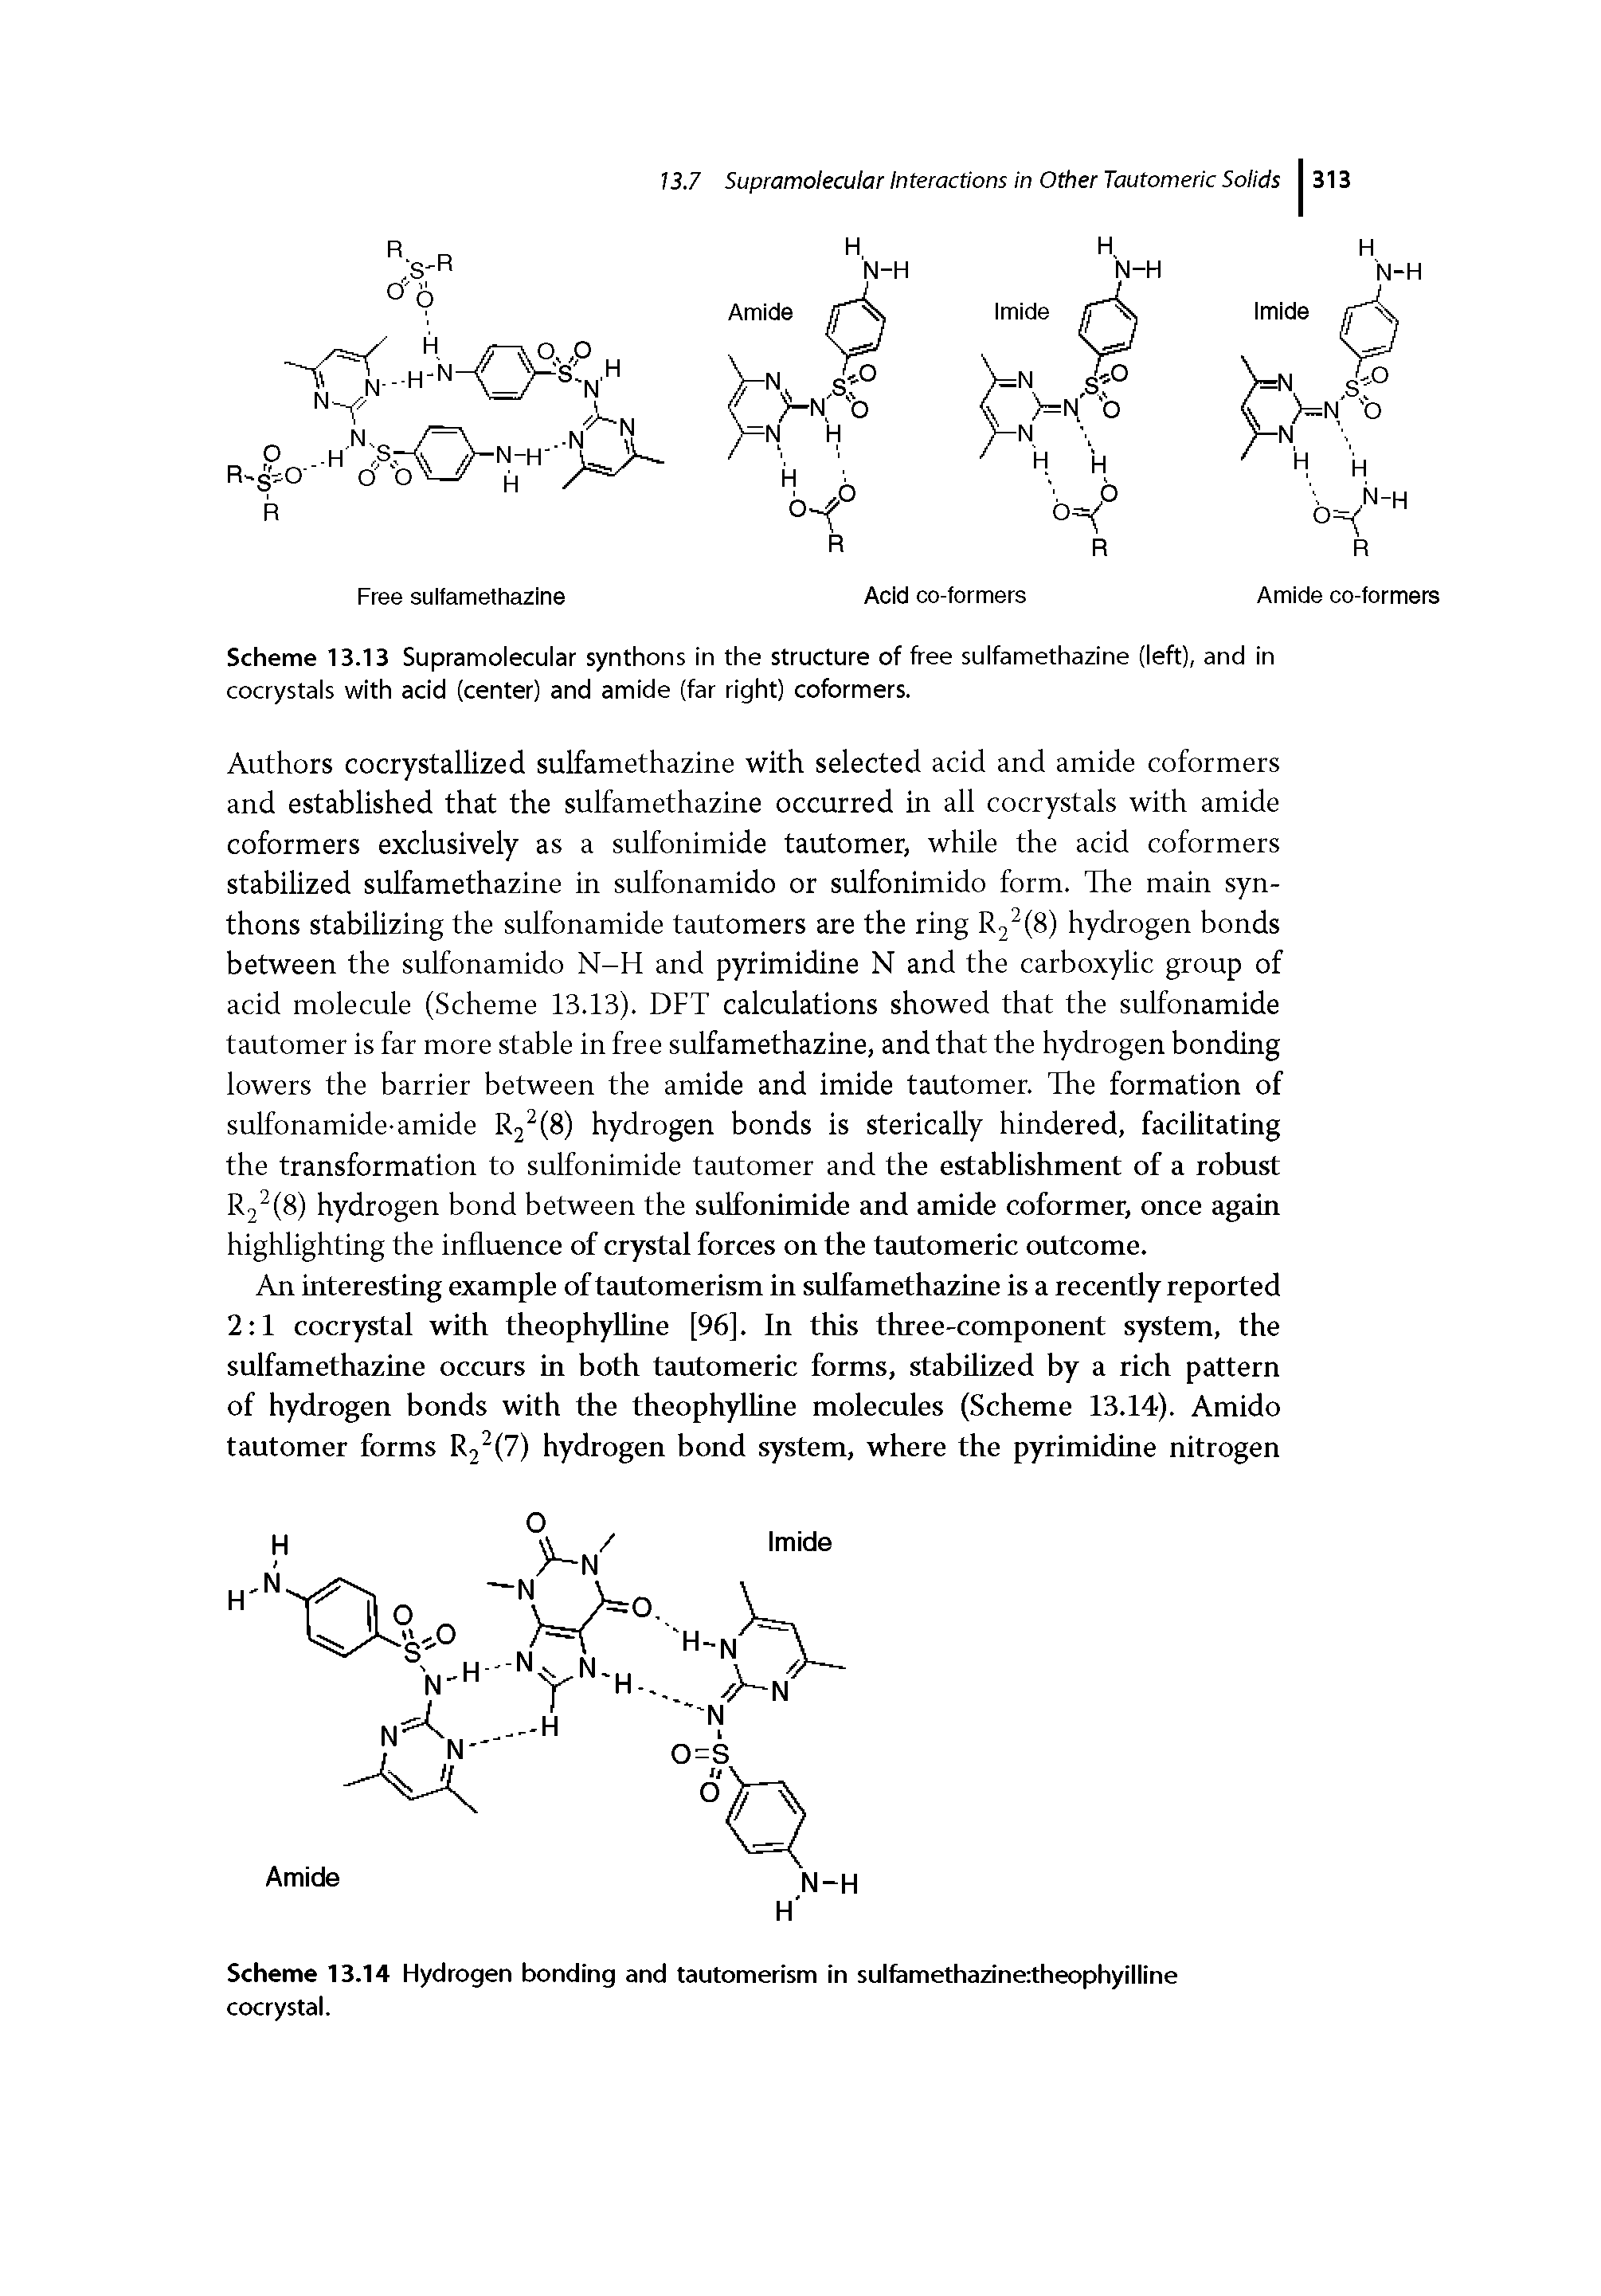 Scheme 13.14 Hydrogen bonding and tautomerism in sulfamethazinertheophyilline cocrystal.